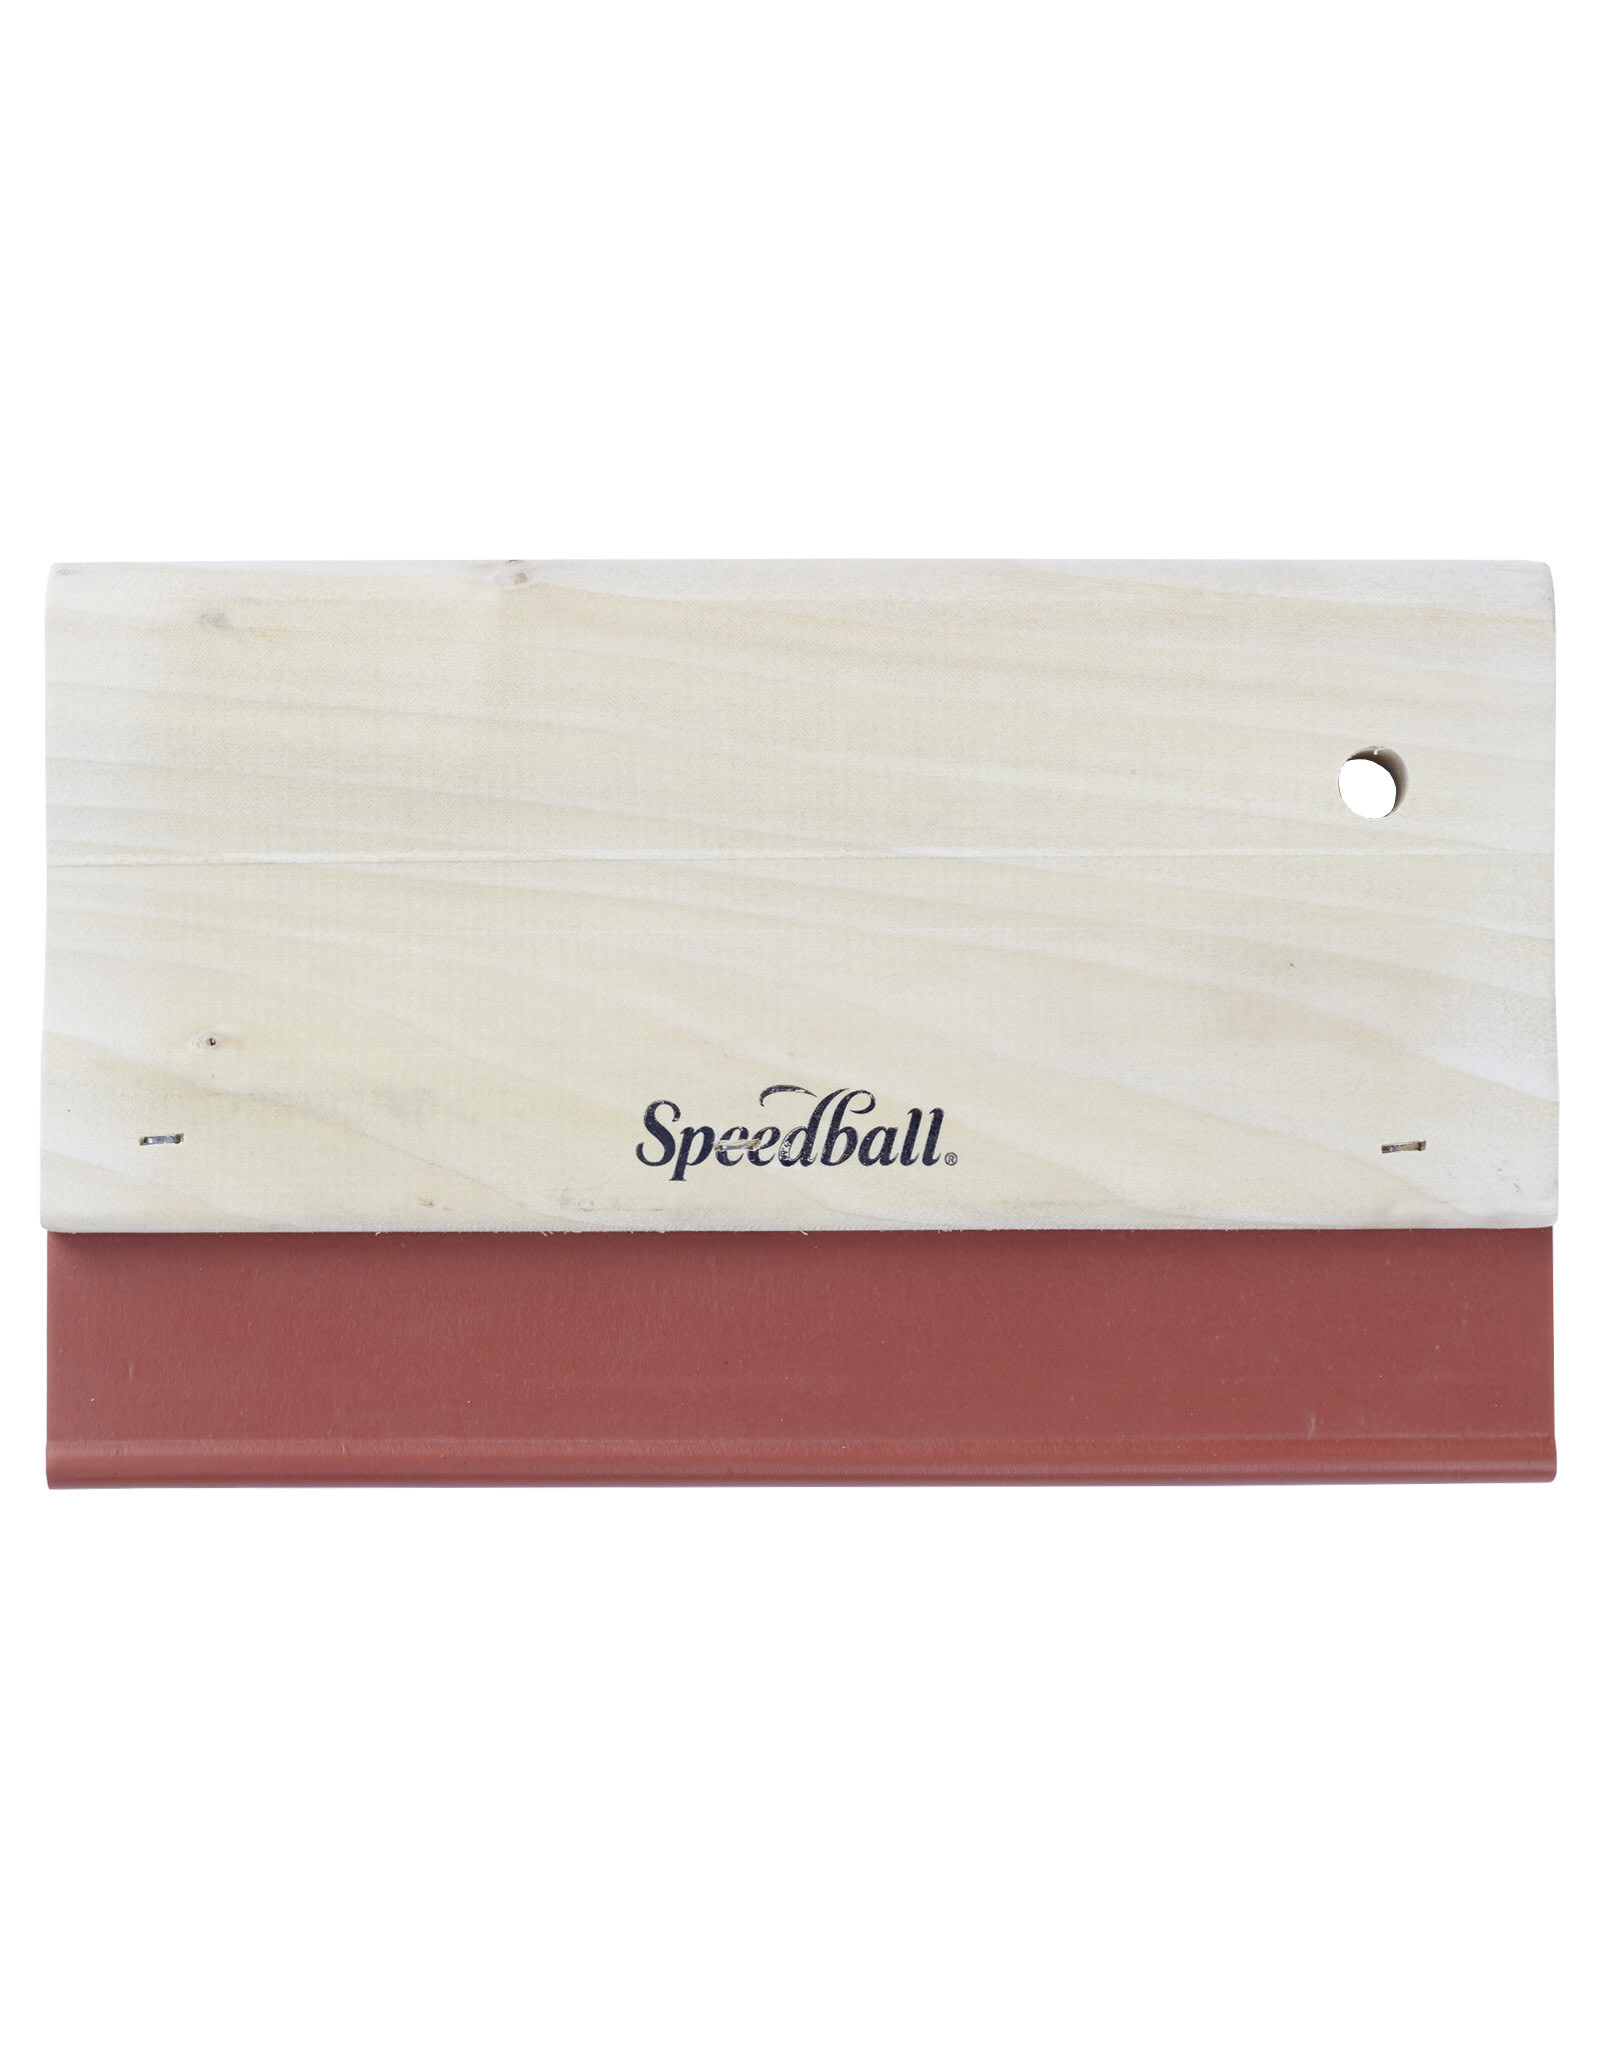 SPEEDBALL ART PRODUCTS Speedball 8" Fabric Squeegee, Nitrile, 65 Durometer